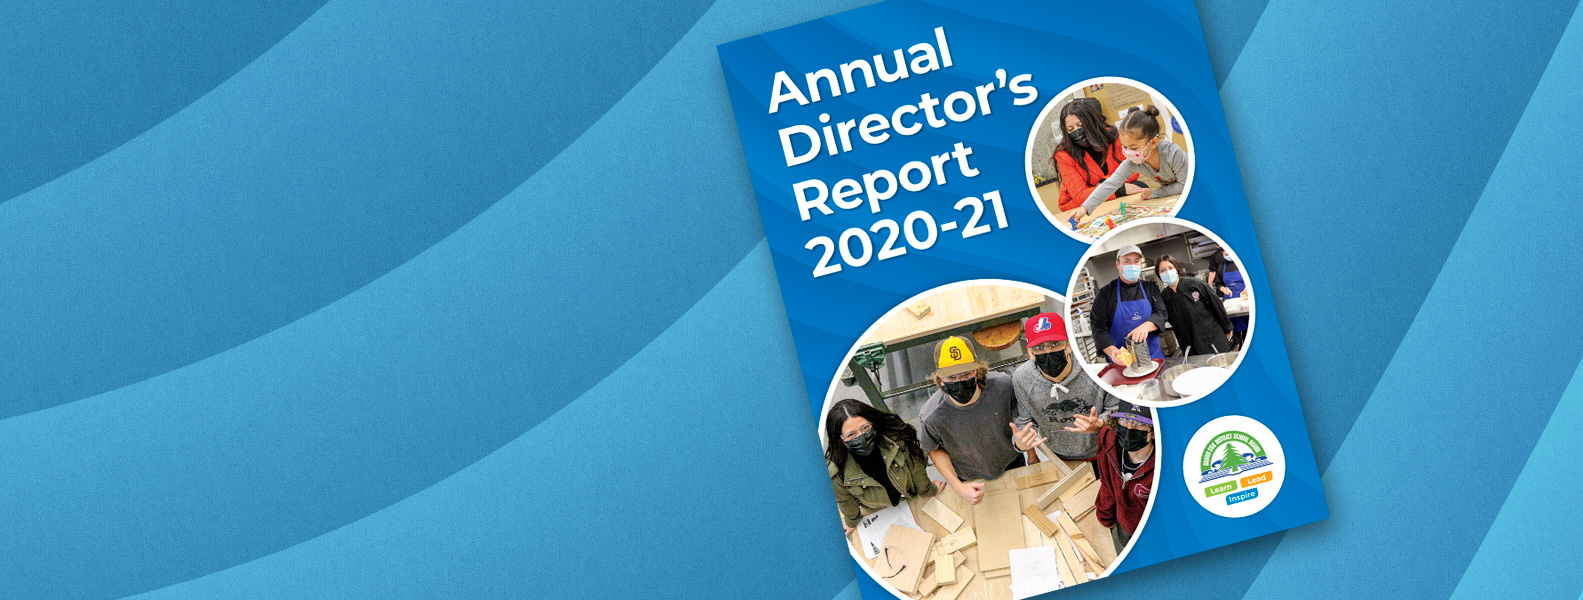 Annual Director's Report 2020-21